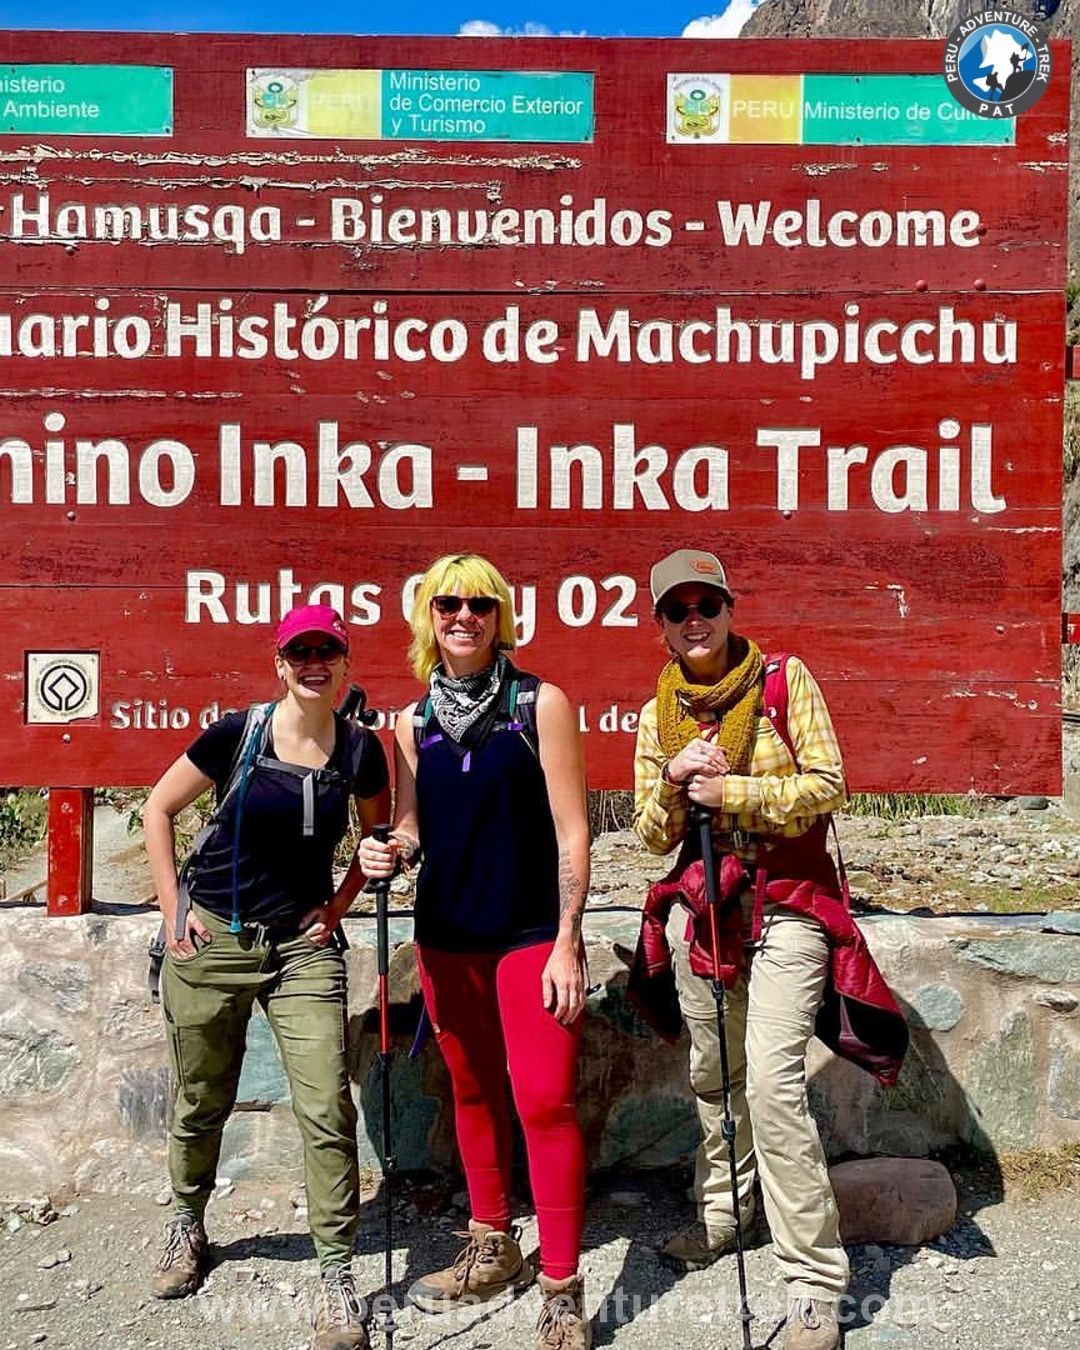 Inca Trail Private Tour 5 Days